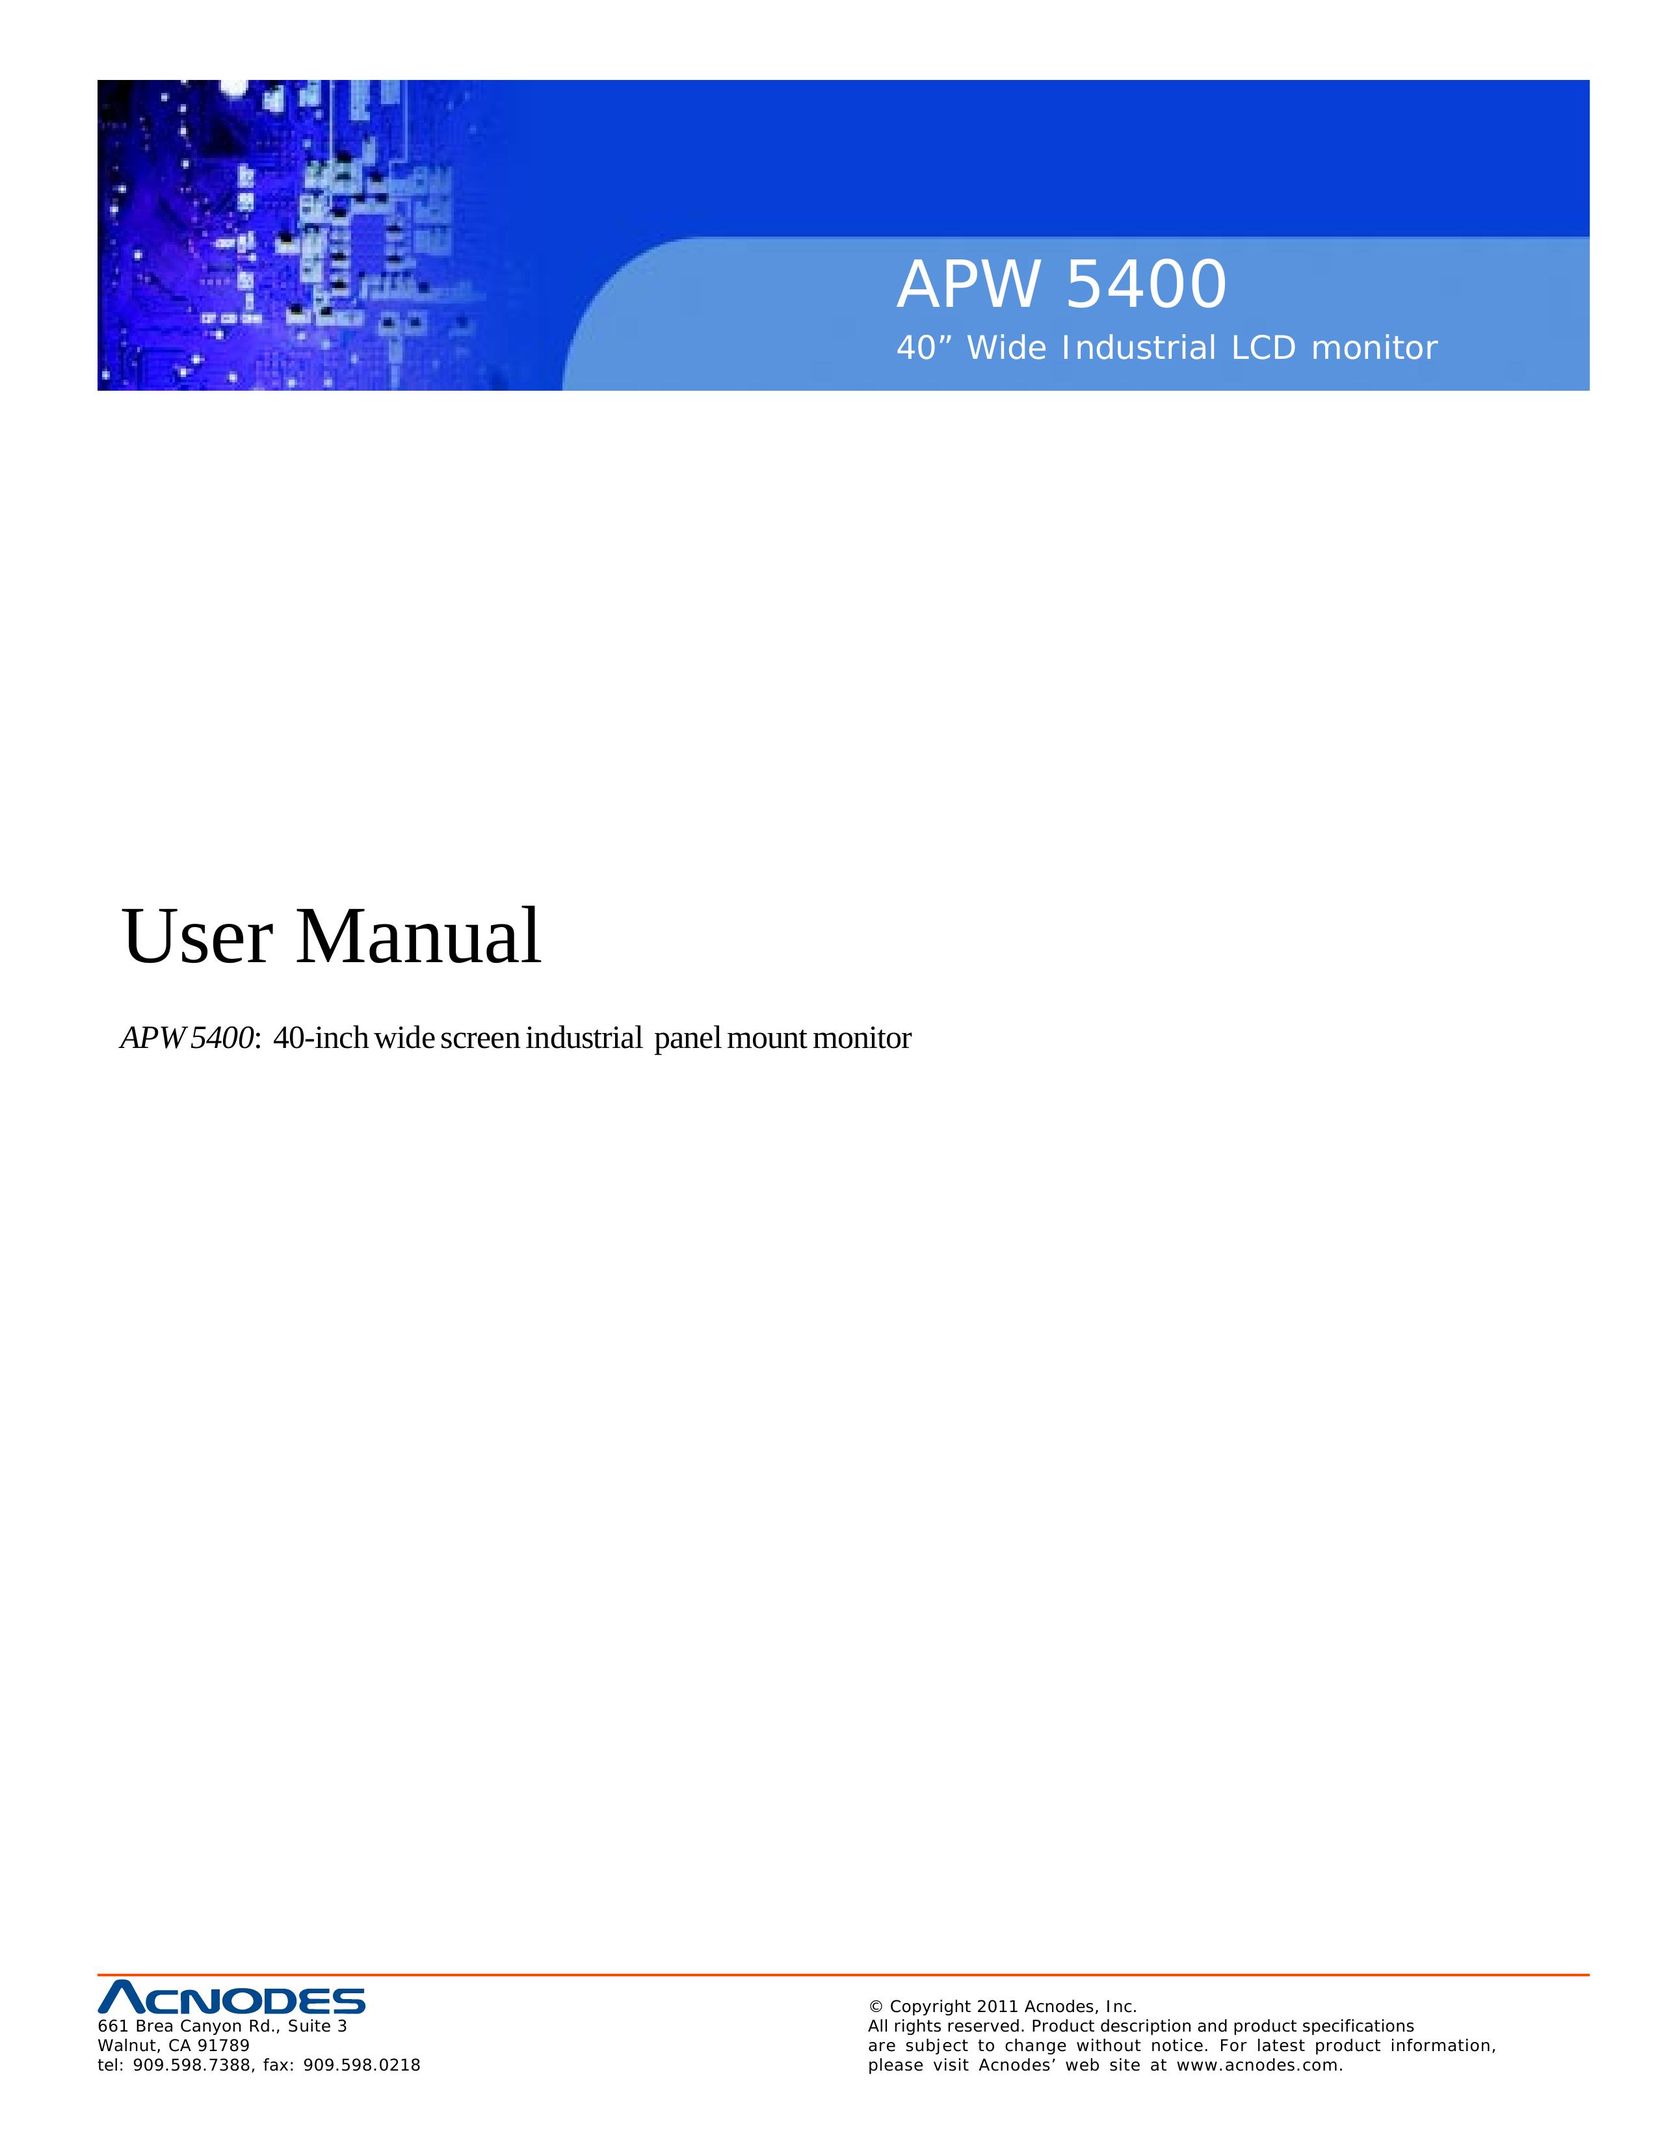 Acnodes APW 5400 Computer Monitor User Manual